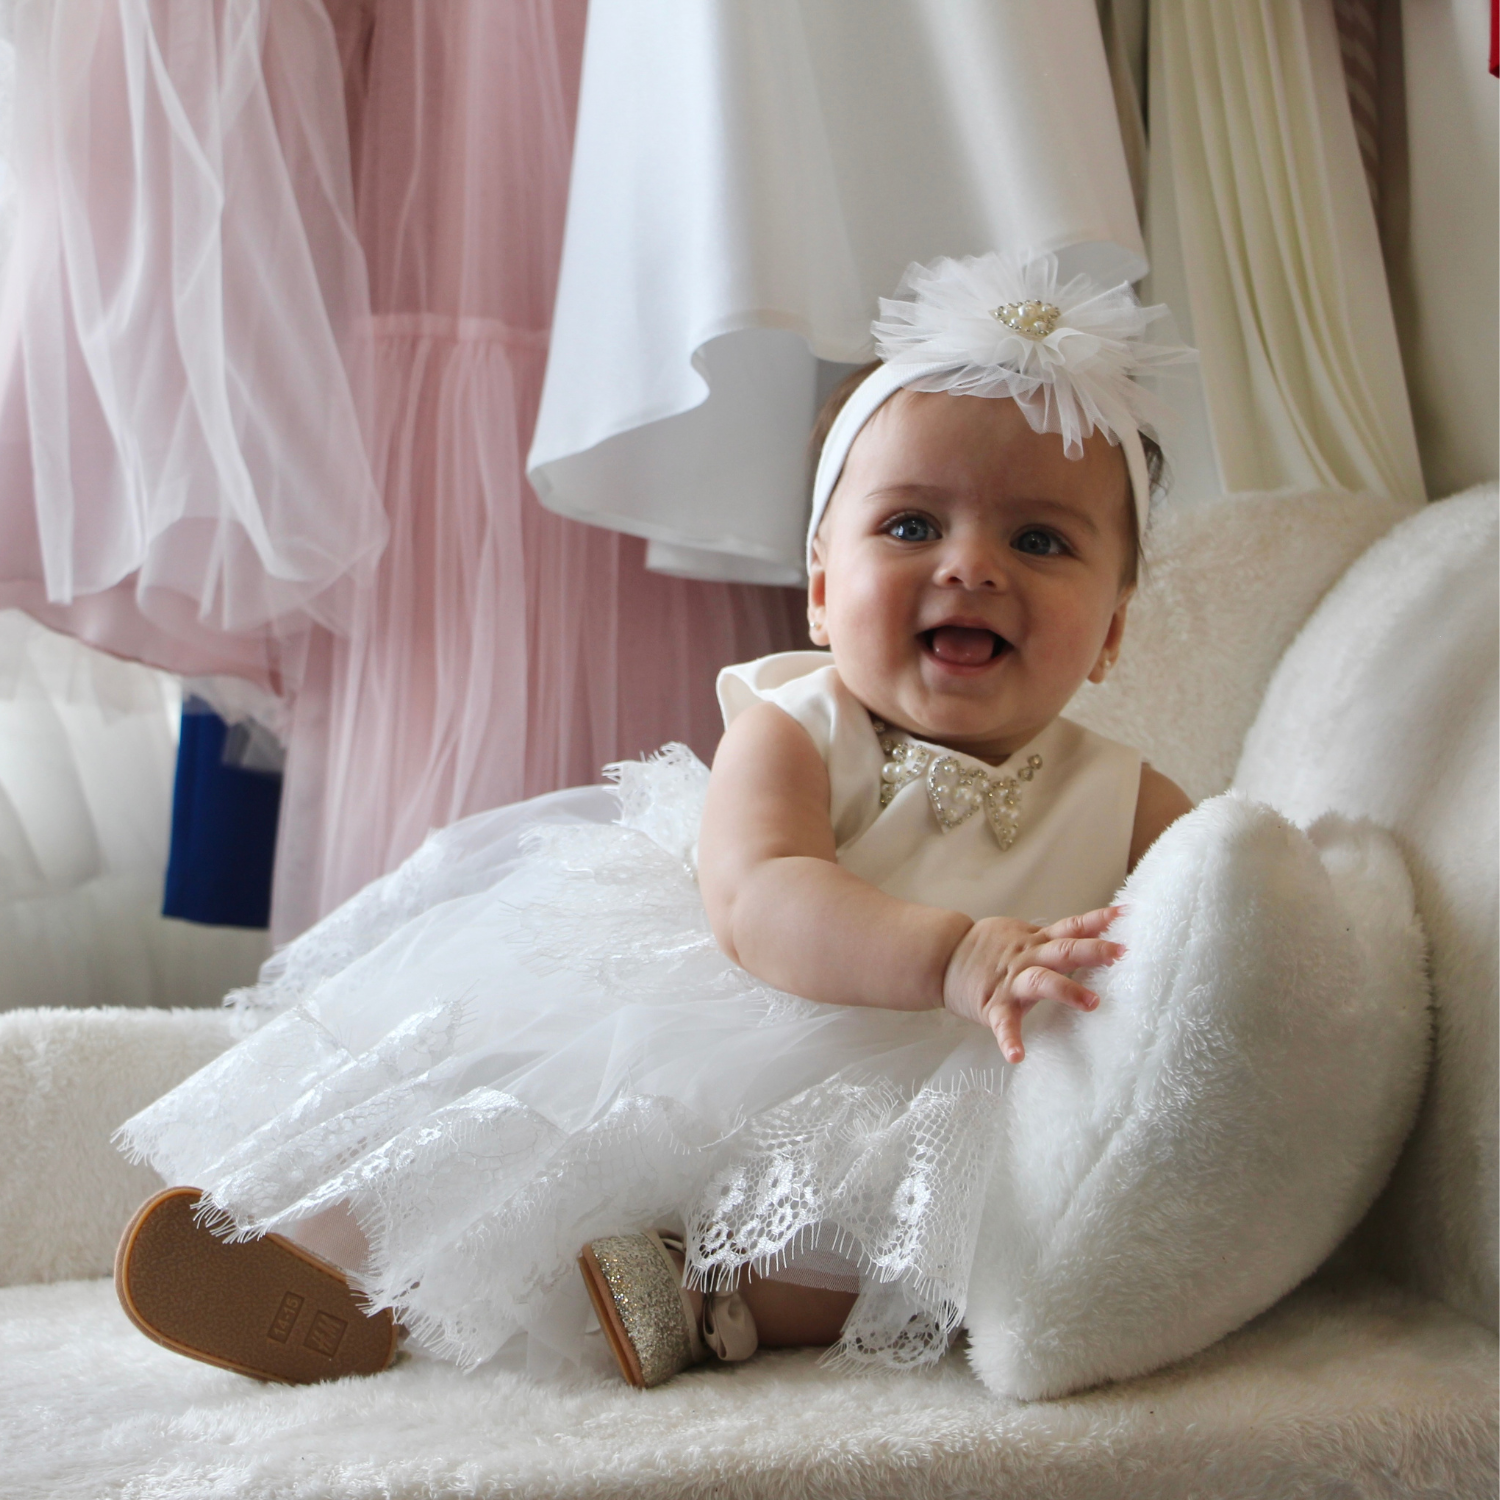 Hearts & Pearls Baby Dress